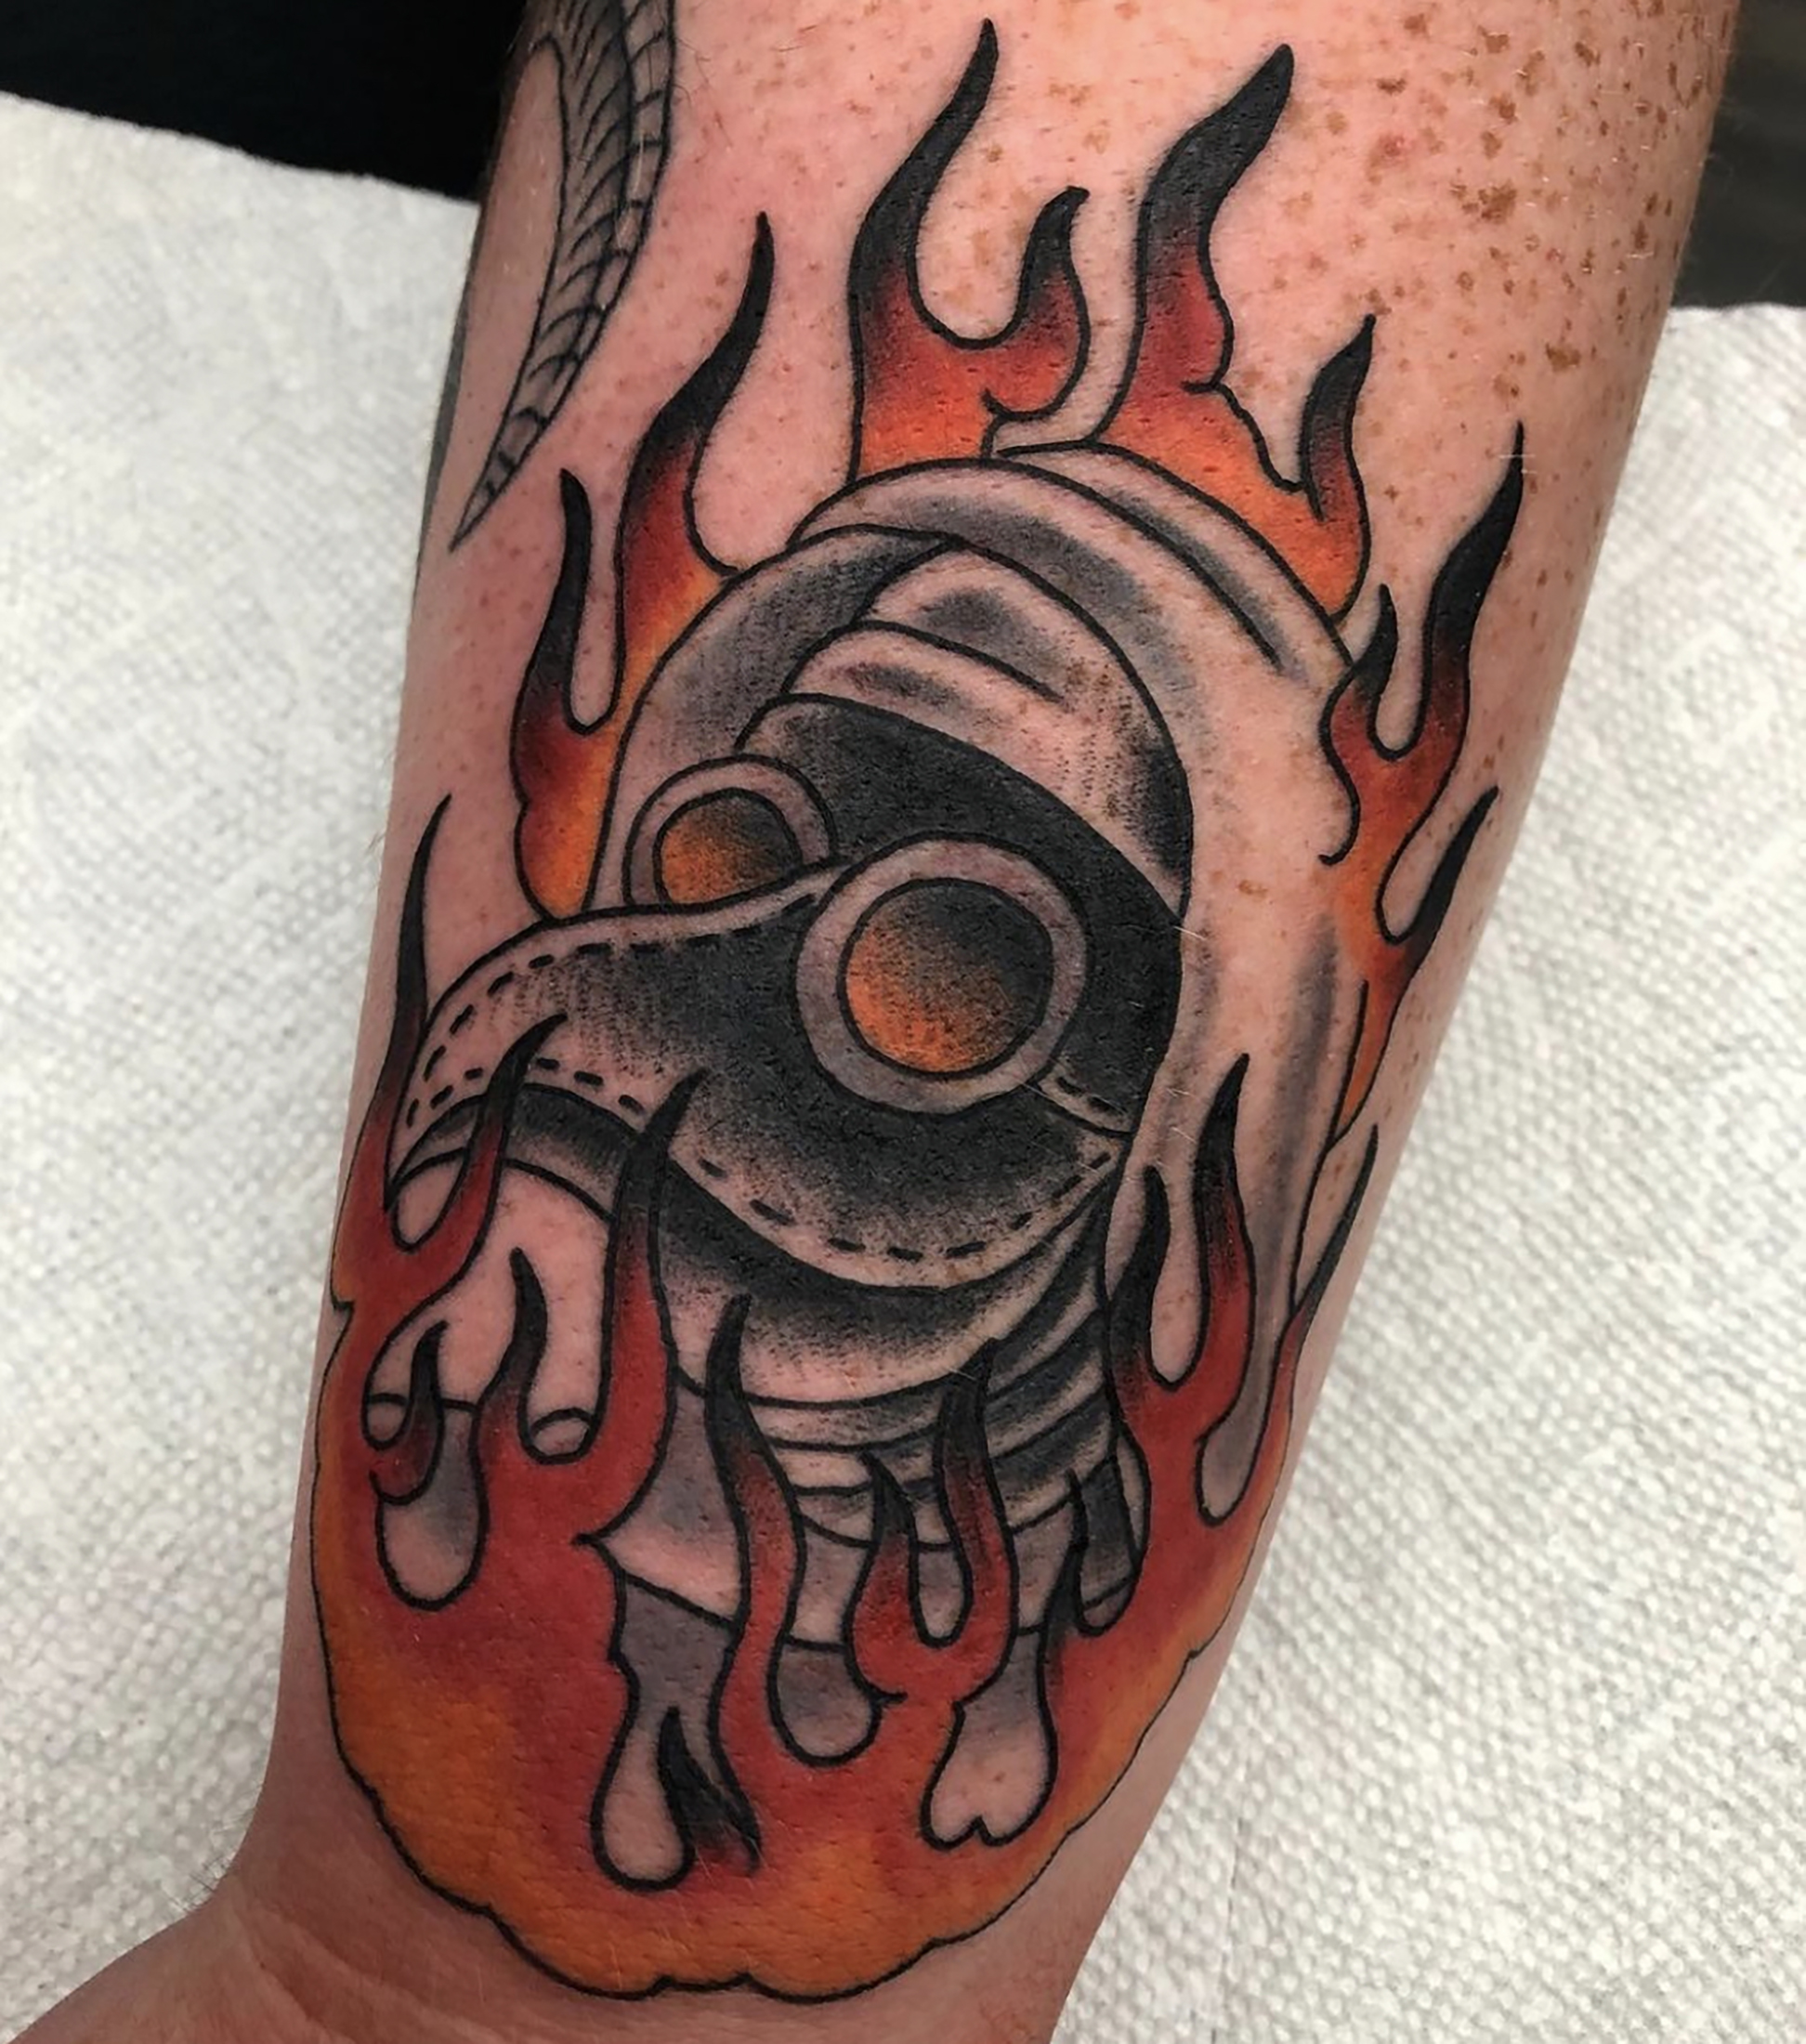 Ian Friend - High Street Tattoo - Columbus, Ohio